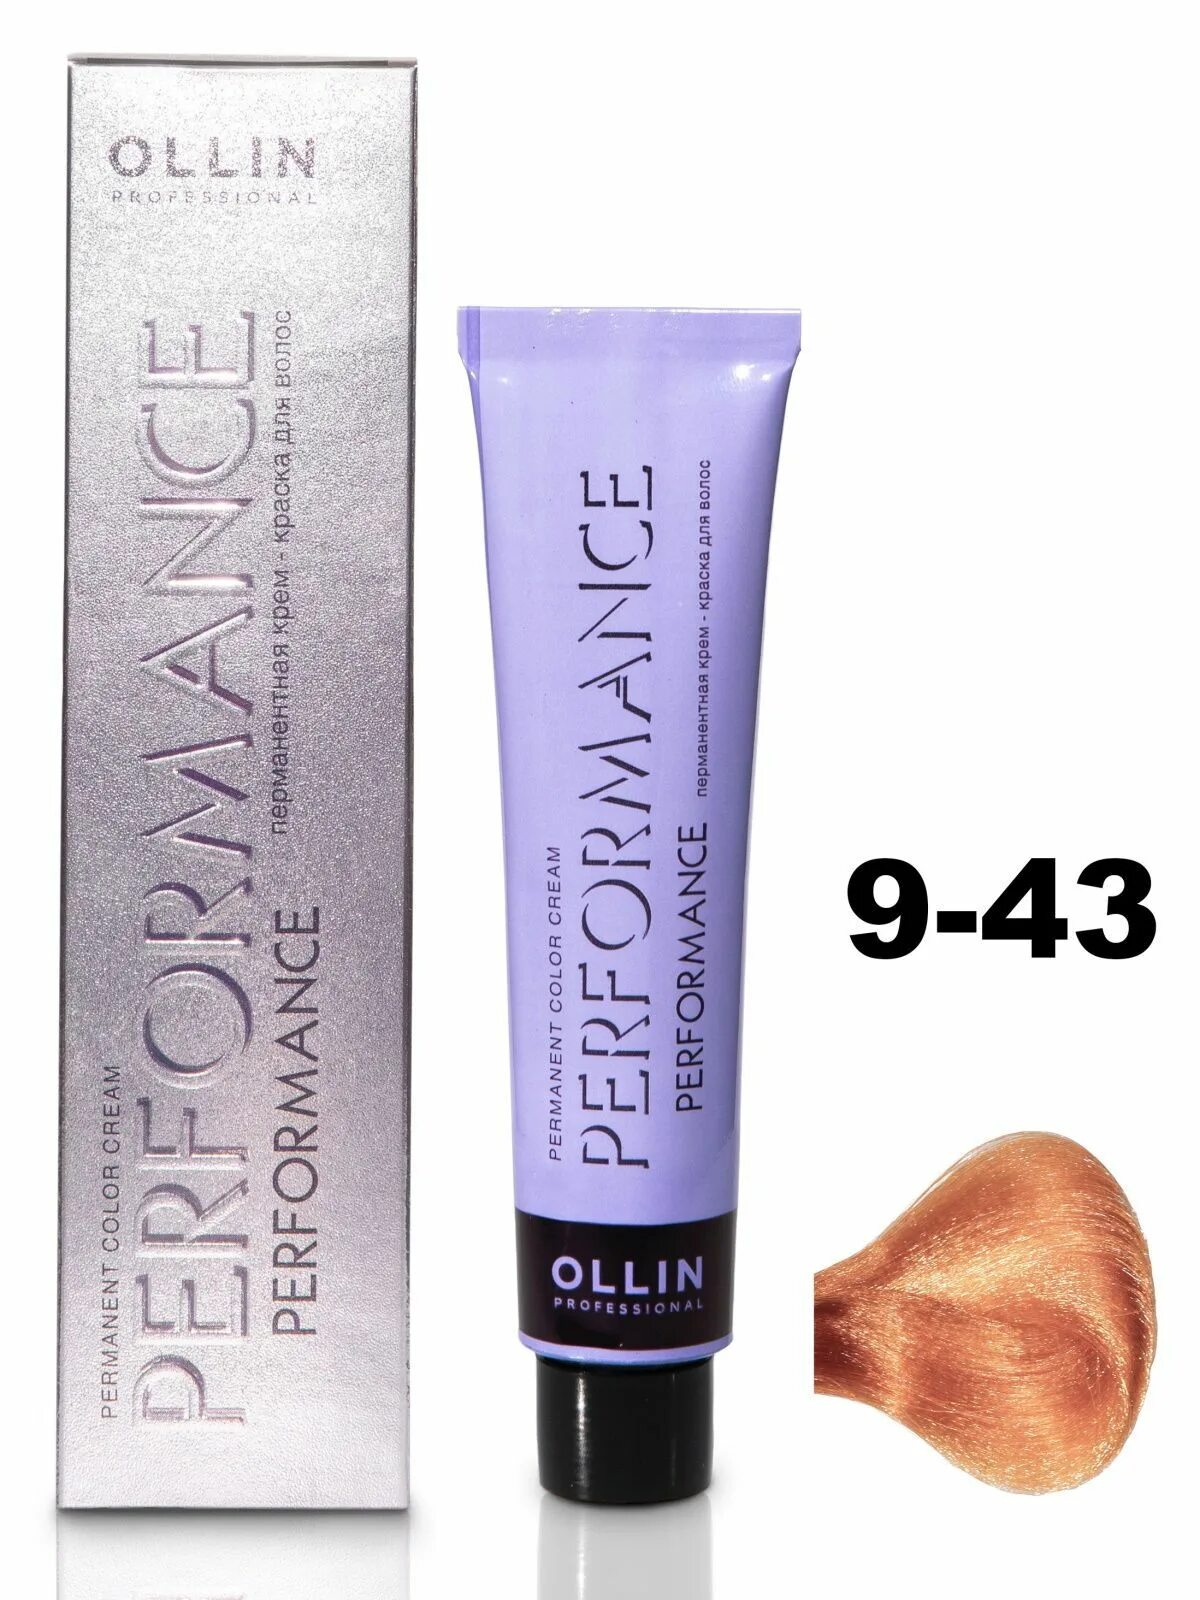 Toni & guy Volume Addiction. Краска для волос Ollin 7.44 отзывы. Performance краска для волос 6.4 отзывы. Performance краска 6/6 отзывы.